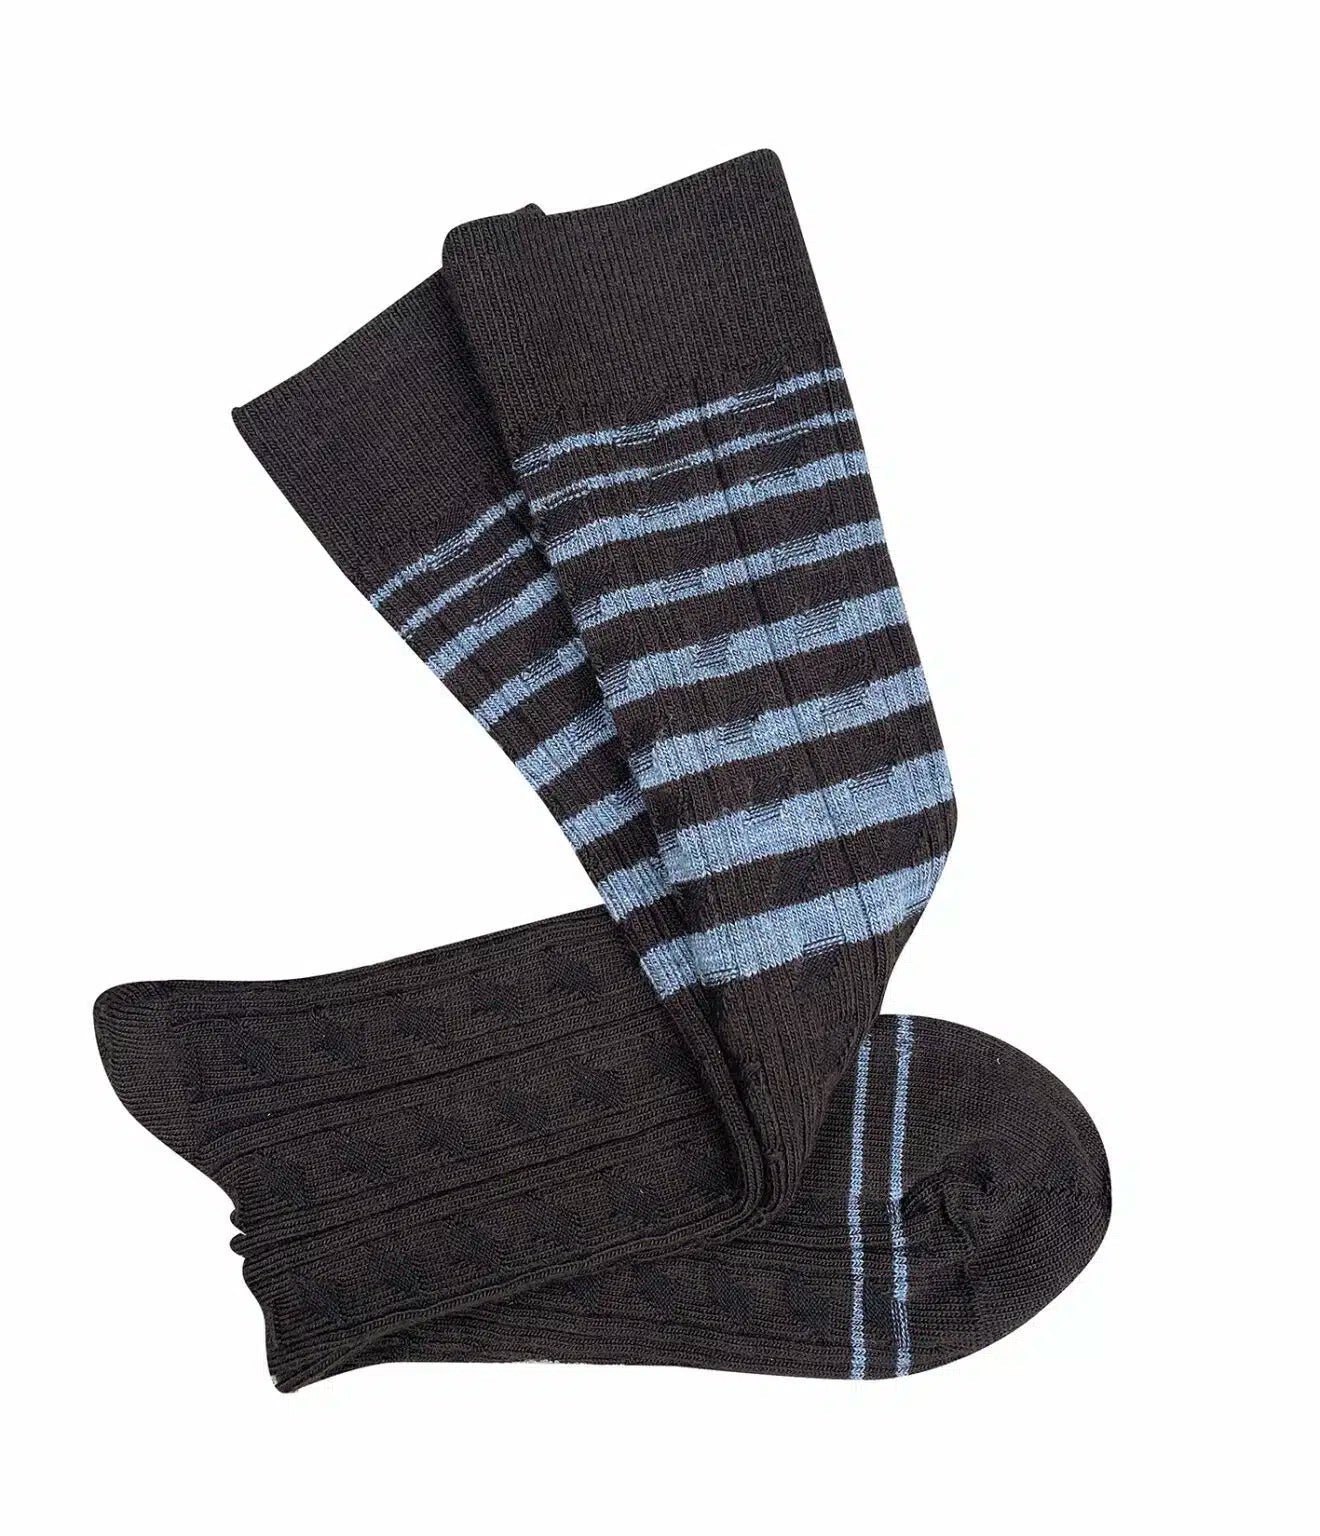 'Harmony' Merino Socks - Tightology socks Tightology Chocolate 